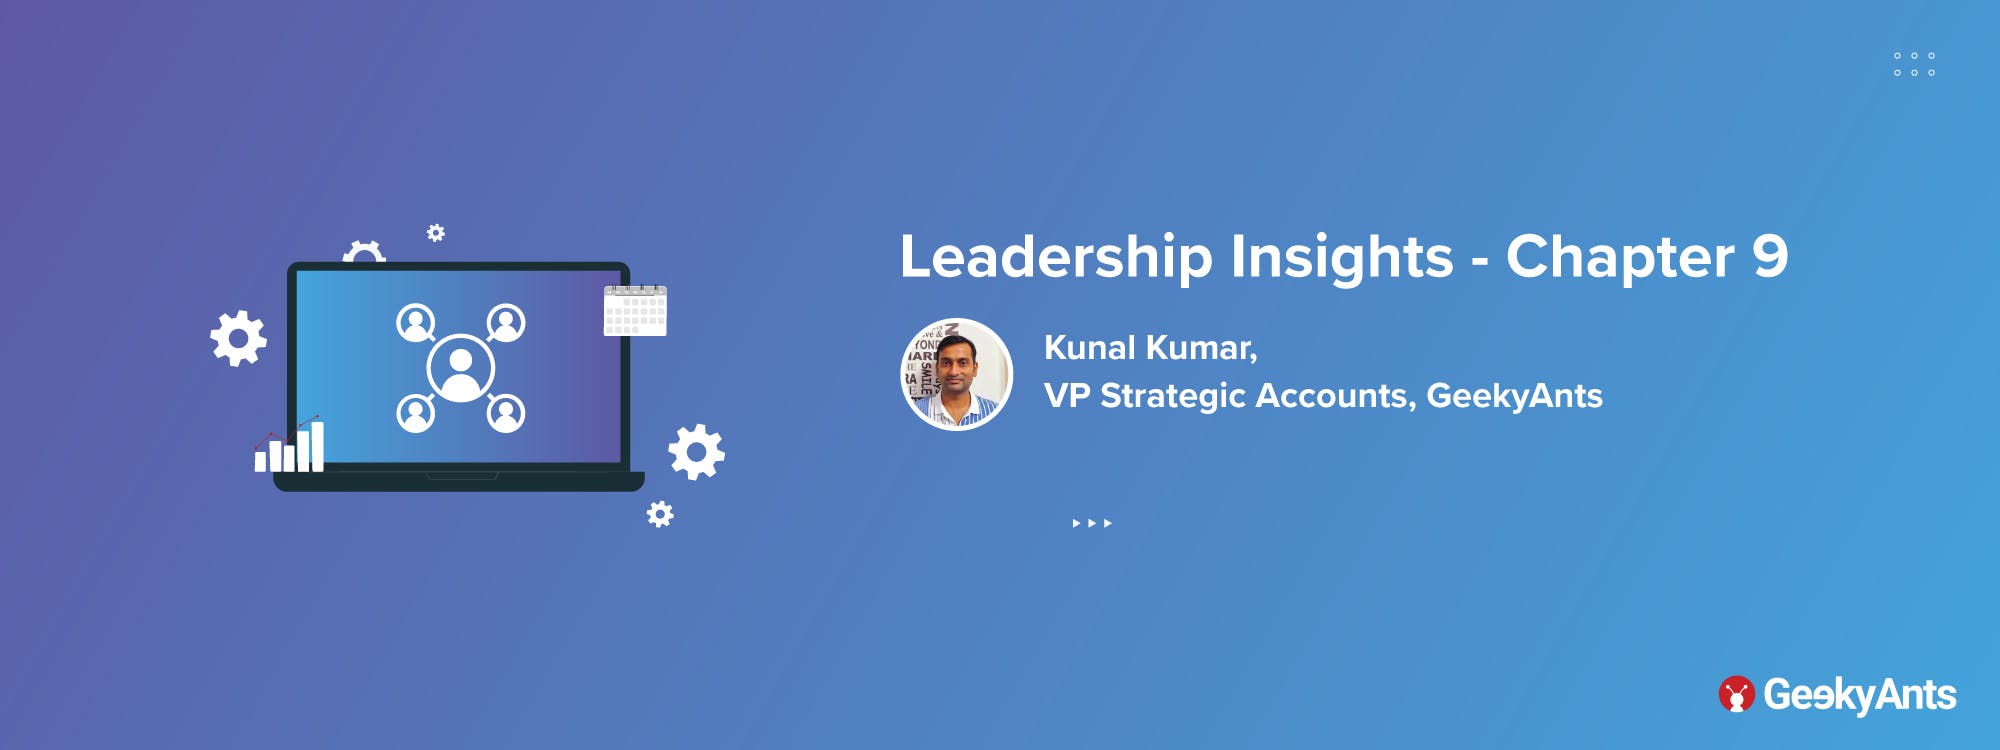 Leadership Insights Chapter 9: Kunal Kumar, VP Strategic Accounts, GeekyAnts